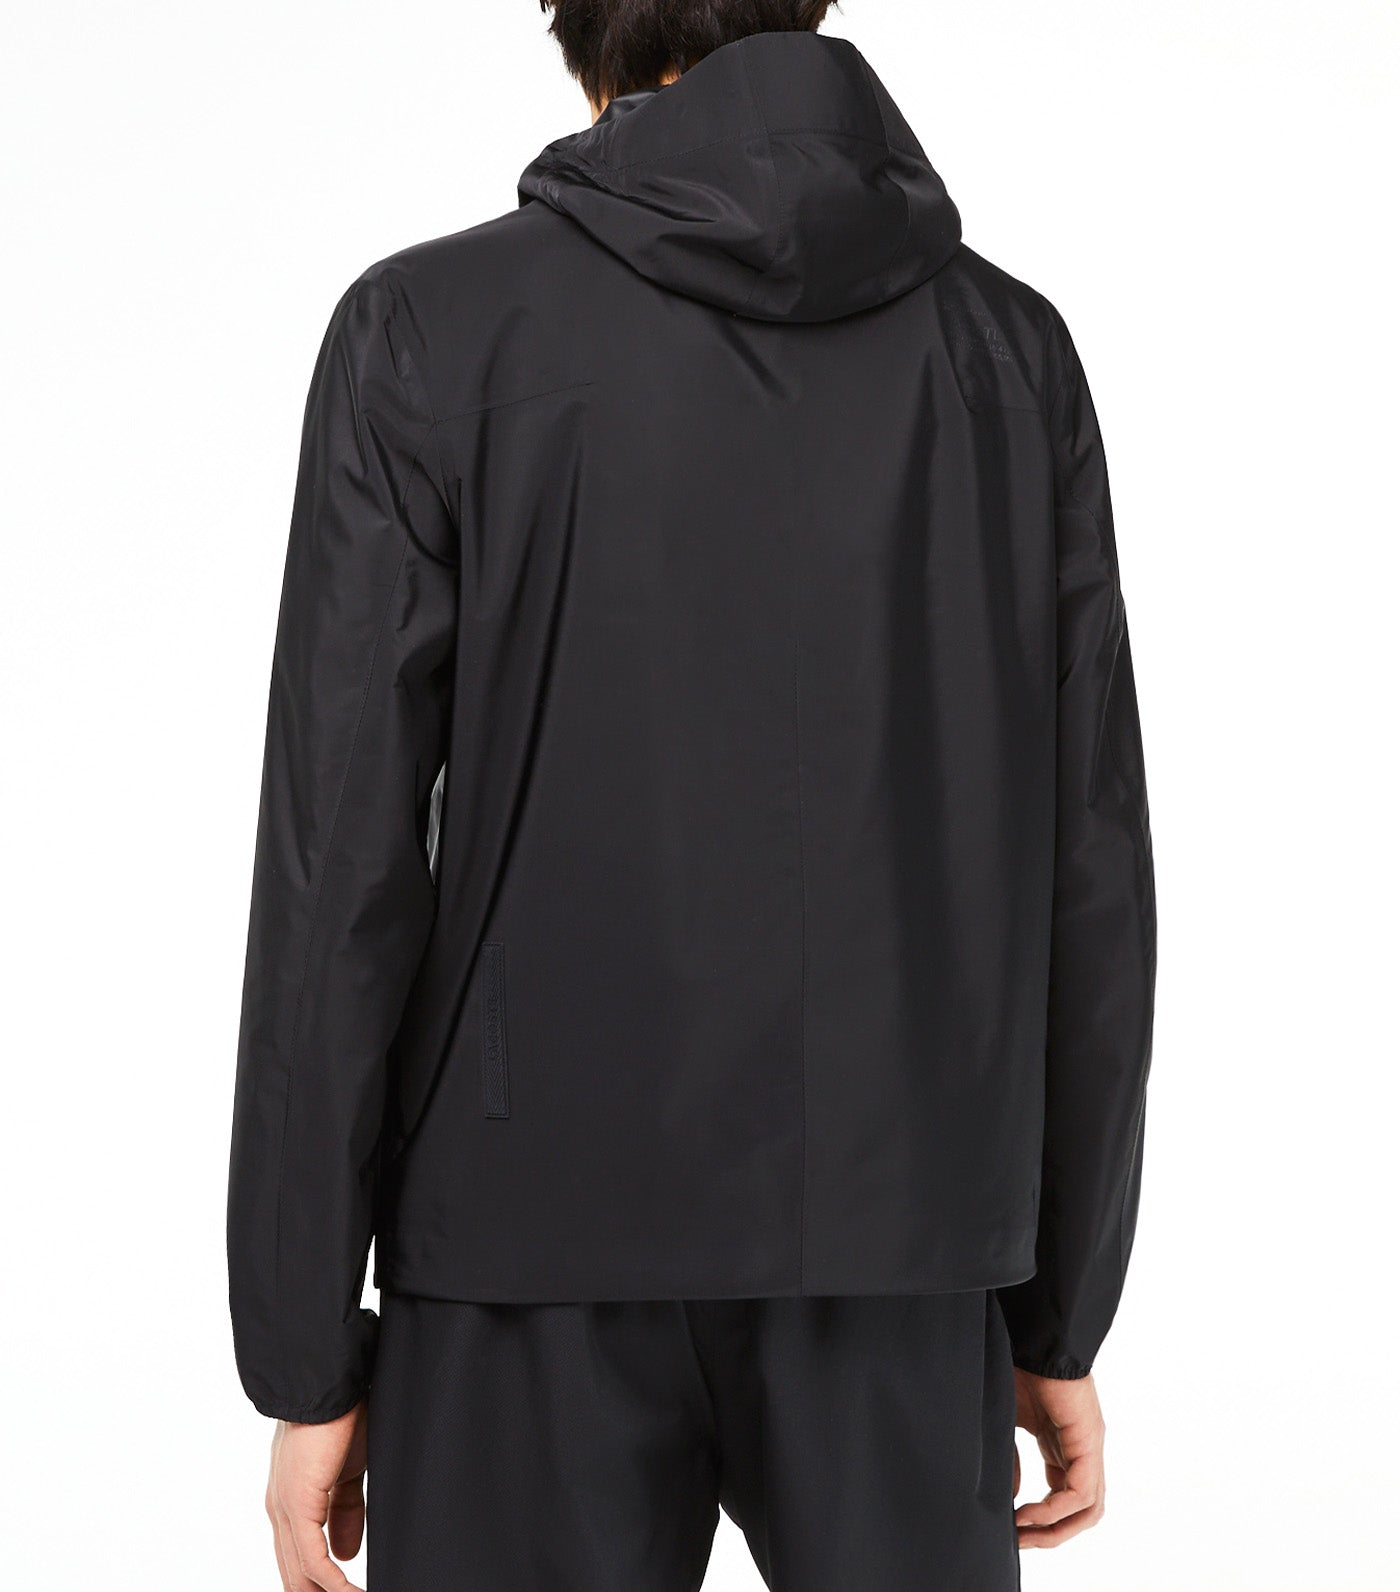 Men’s Pocket Front Zipped Jacket Black